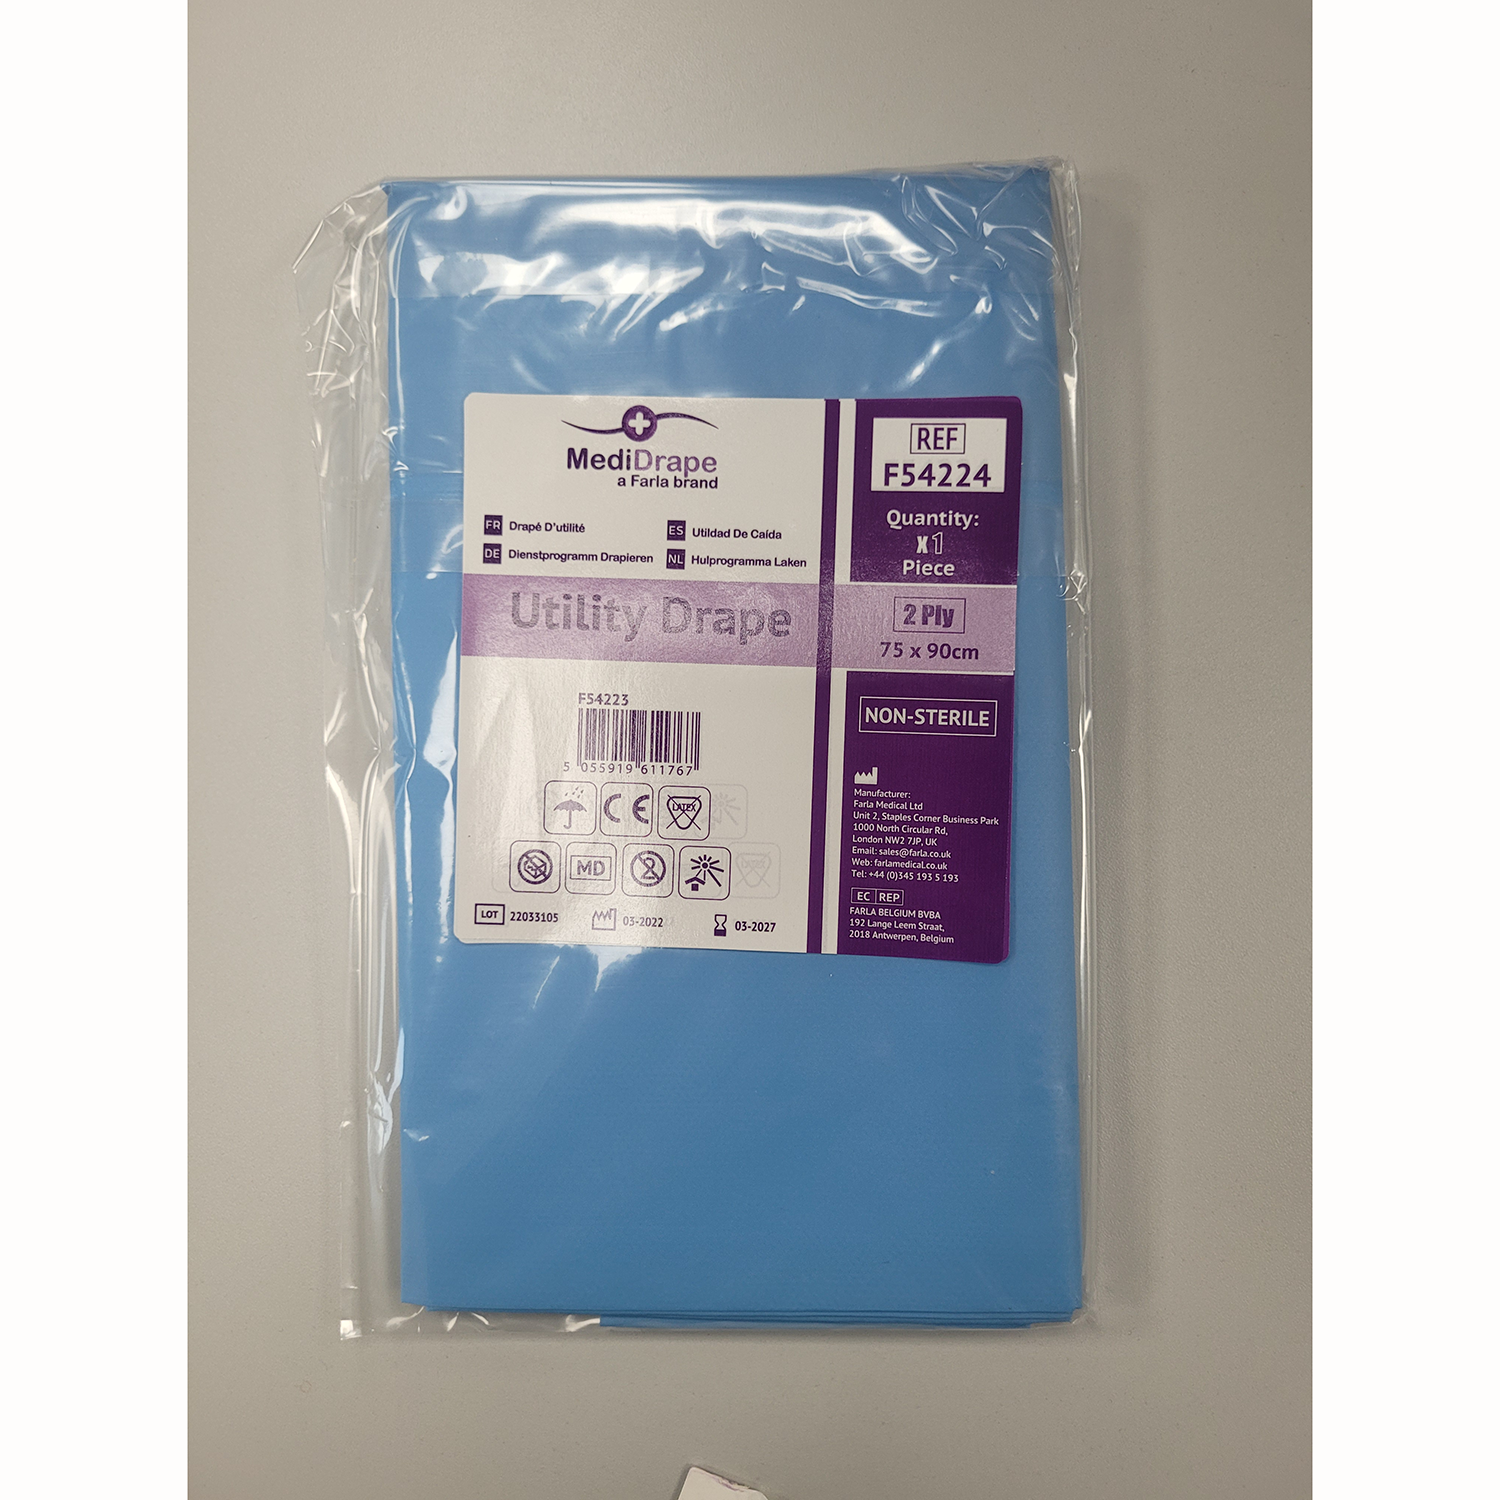 MediDrape Utility Drape | 75 x 90cm | Non-Sterile | Pack of 40